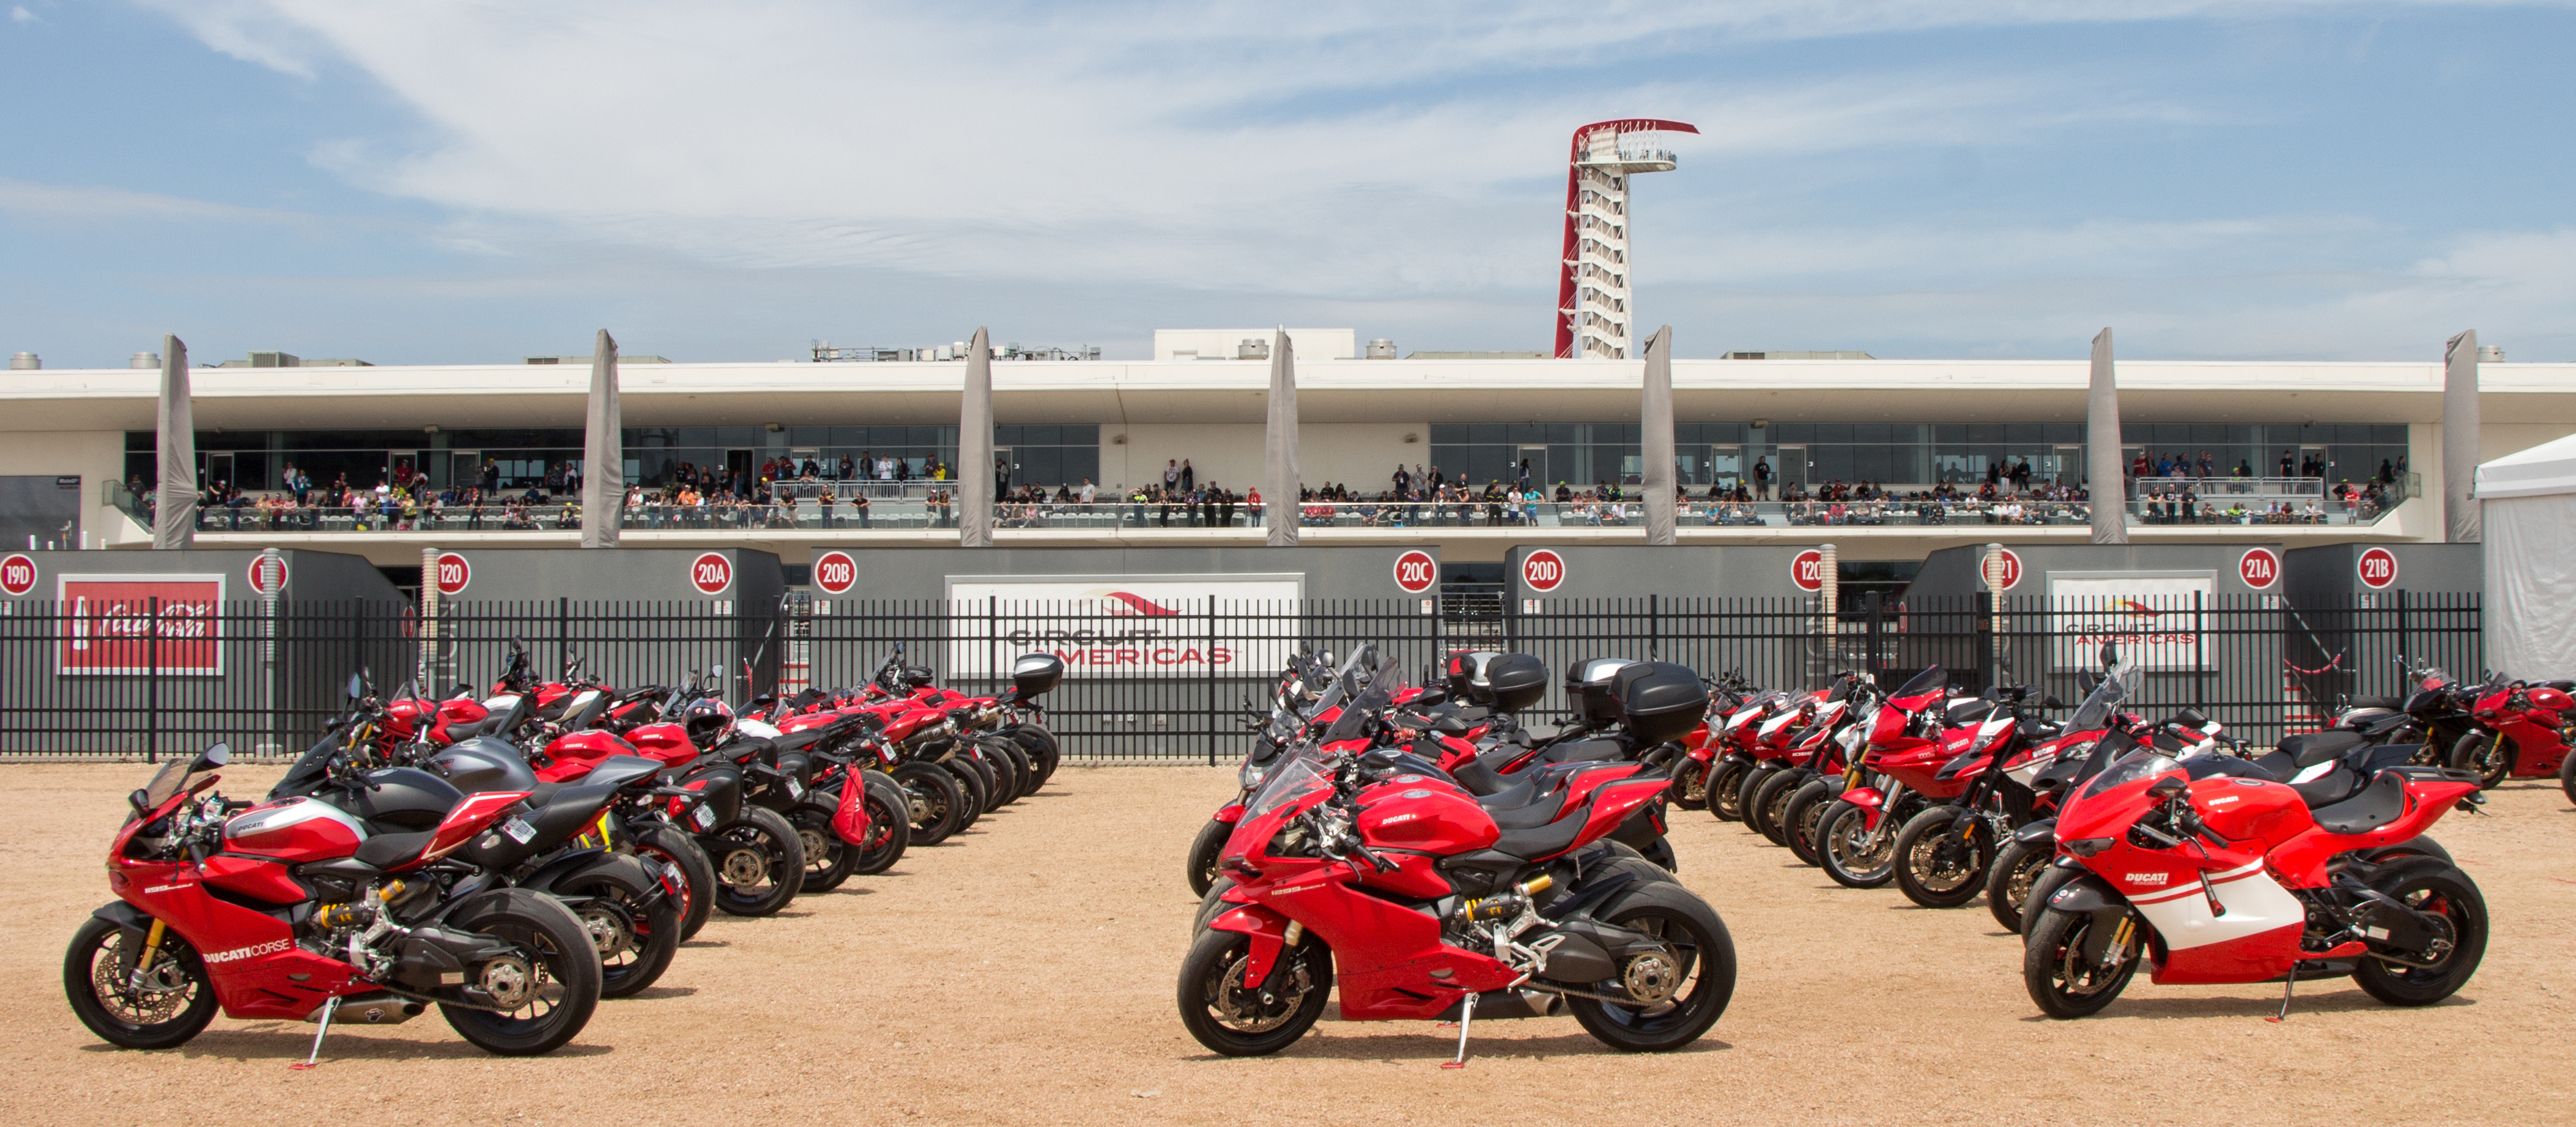 Ducati Island MotoGP Circuit of The Americas